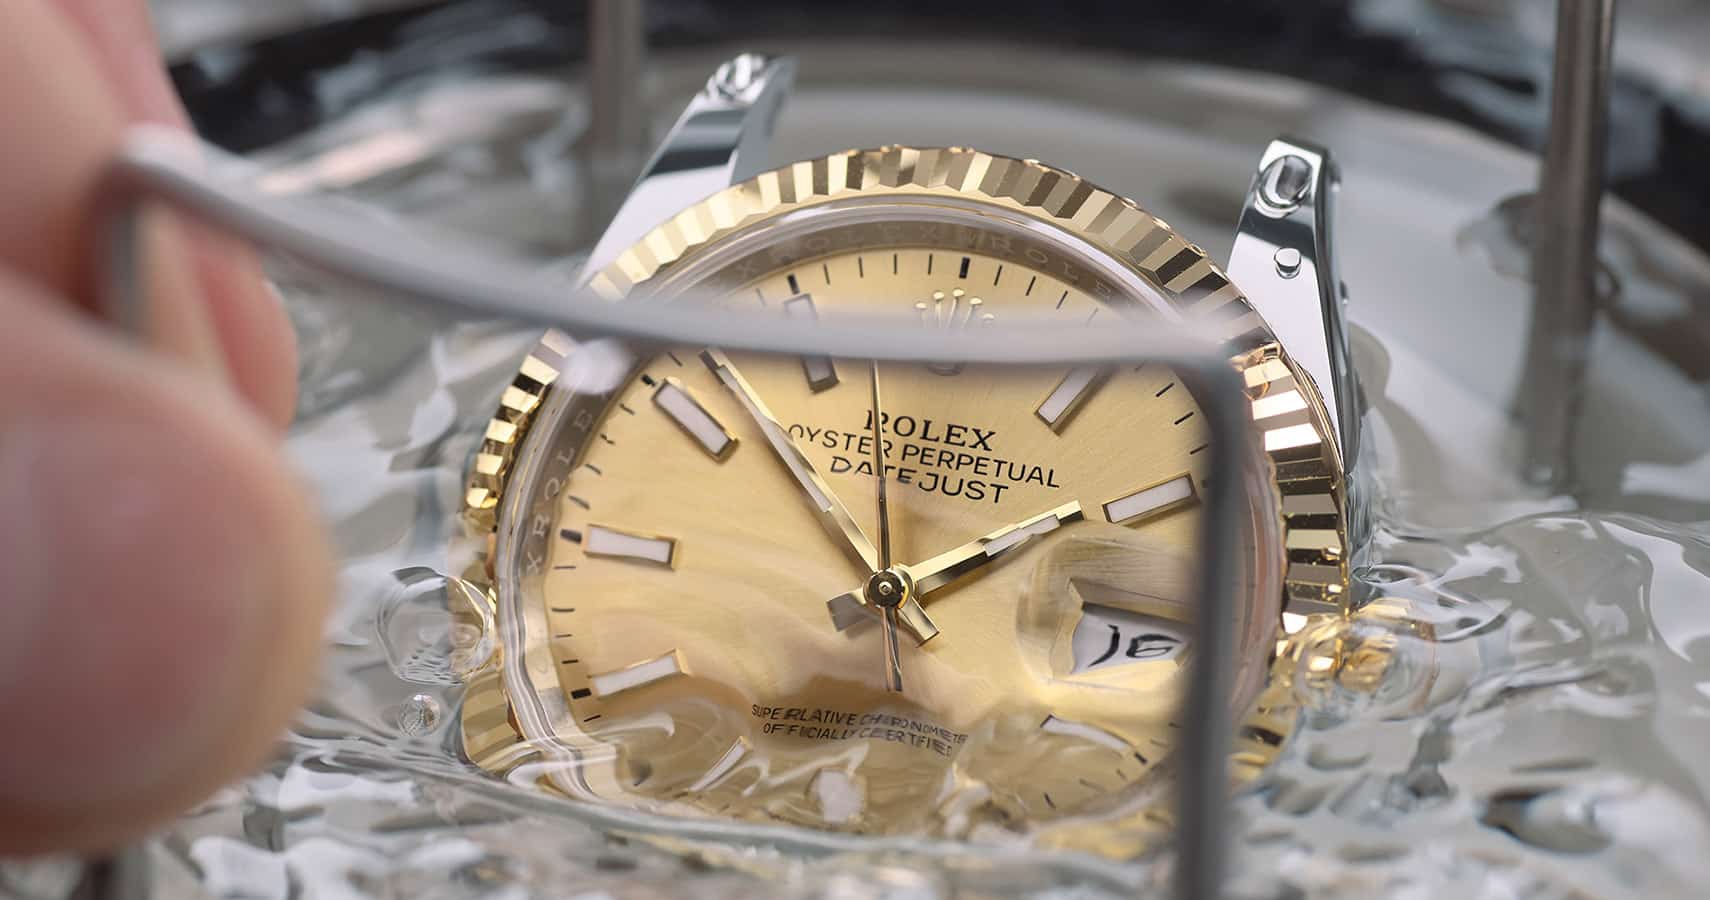 Rolex watch waterproof testing